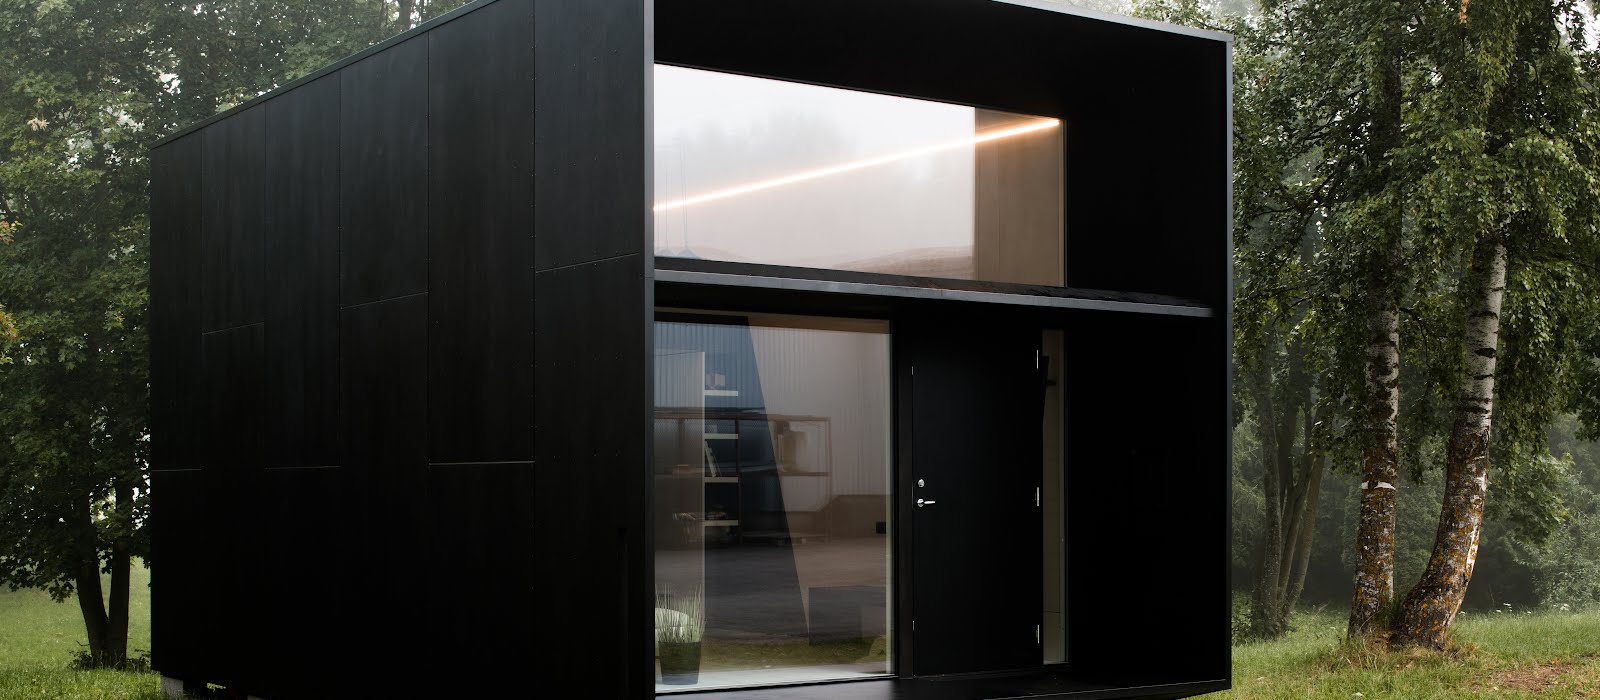 Tiny homes Ireland: this company is bringing design-forward modular housing to Ireland